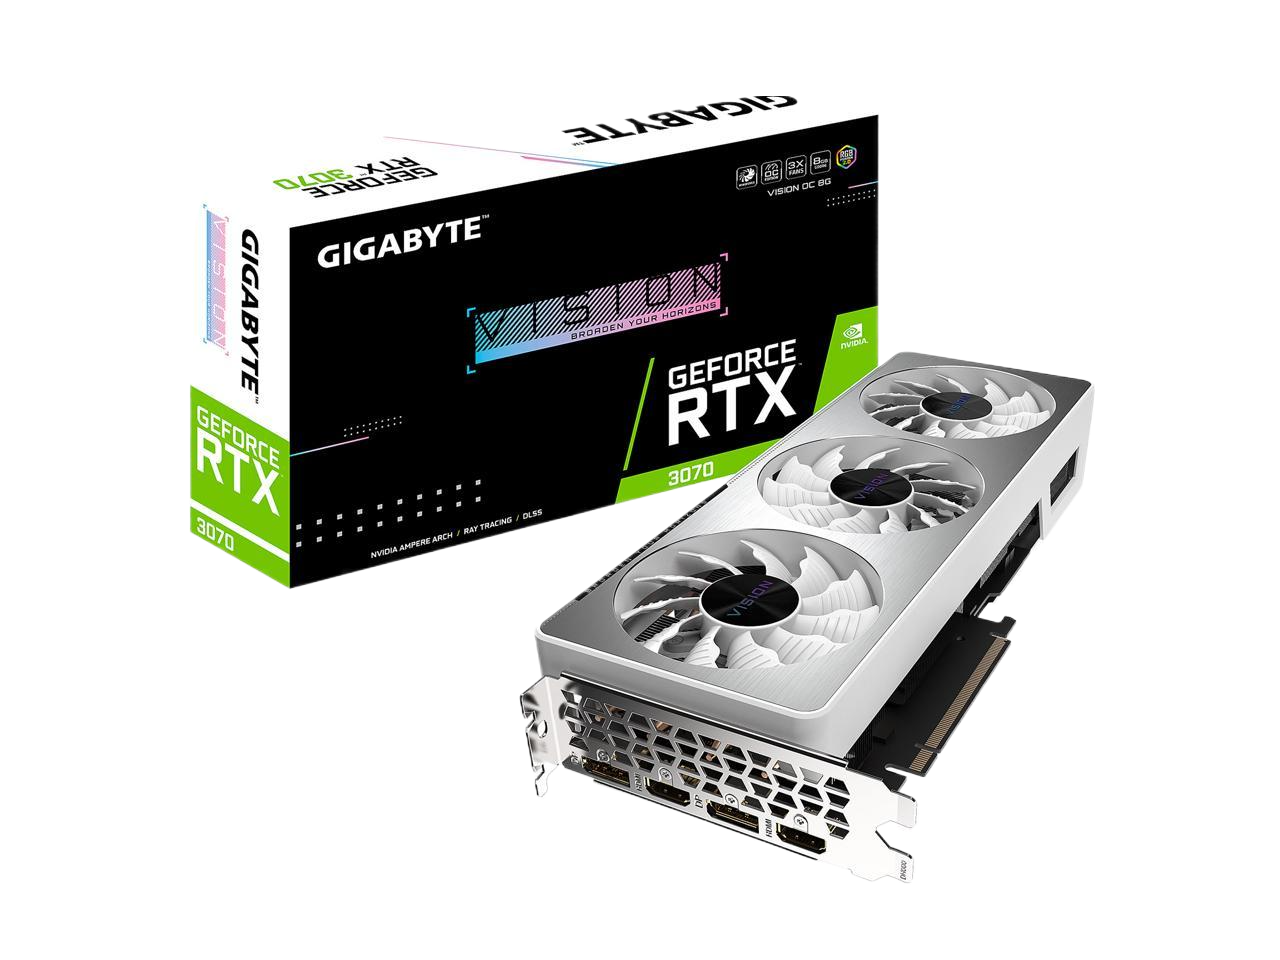 GIGABYTE GeForce RTX 3070 VISION OC 8G (LHR) 8GB 256-bit GDDR6 PCI Express 4.0,2 × HDMI 2.1 Interface 2×DisplayPort 1.4a Interface Video Card GV-N3070VISION OC-8GD